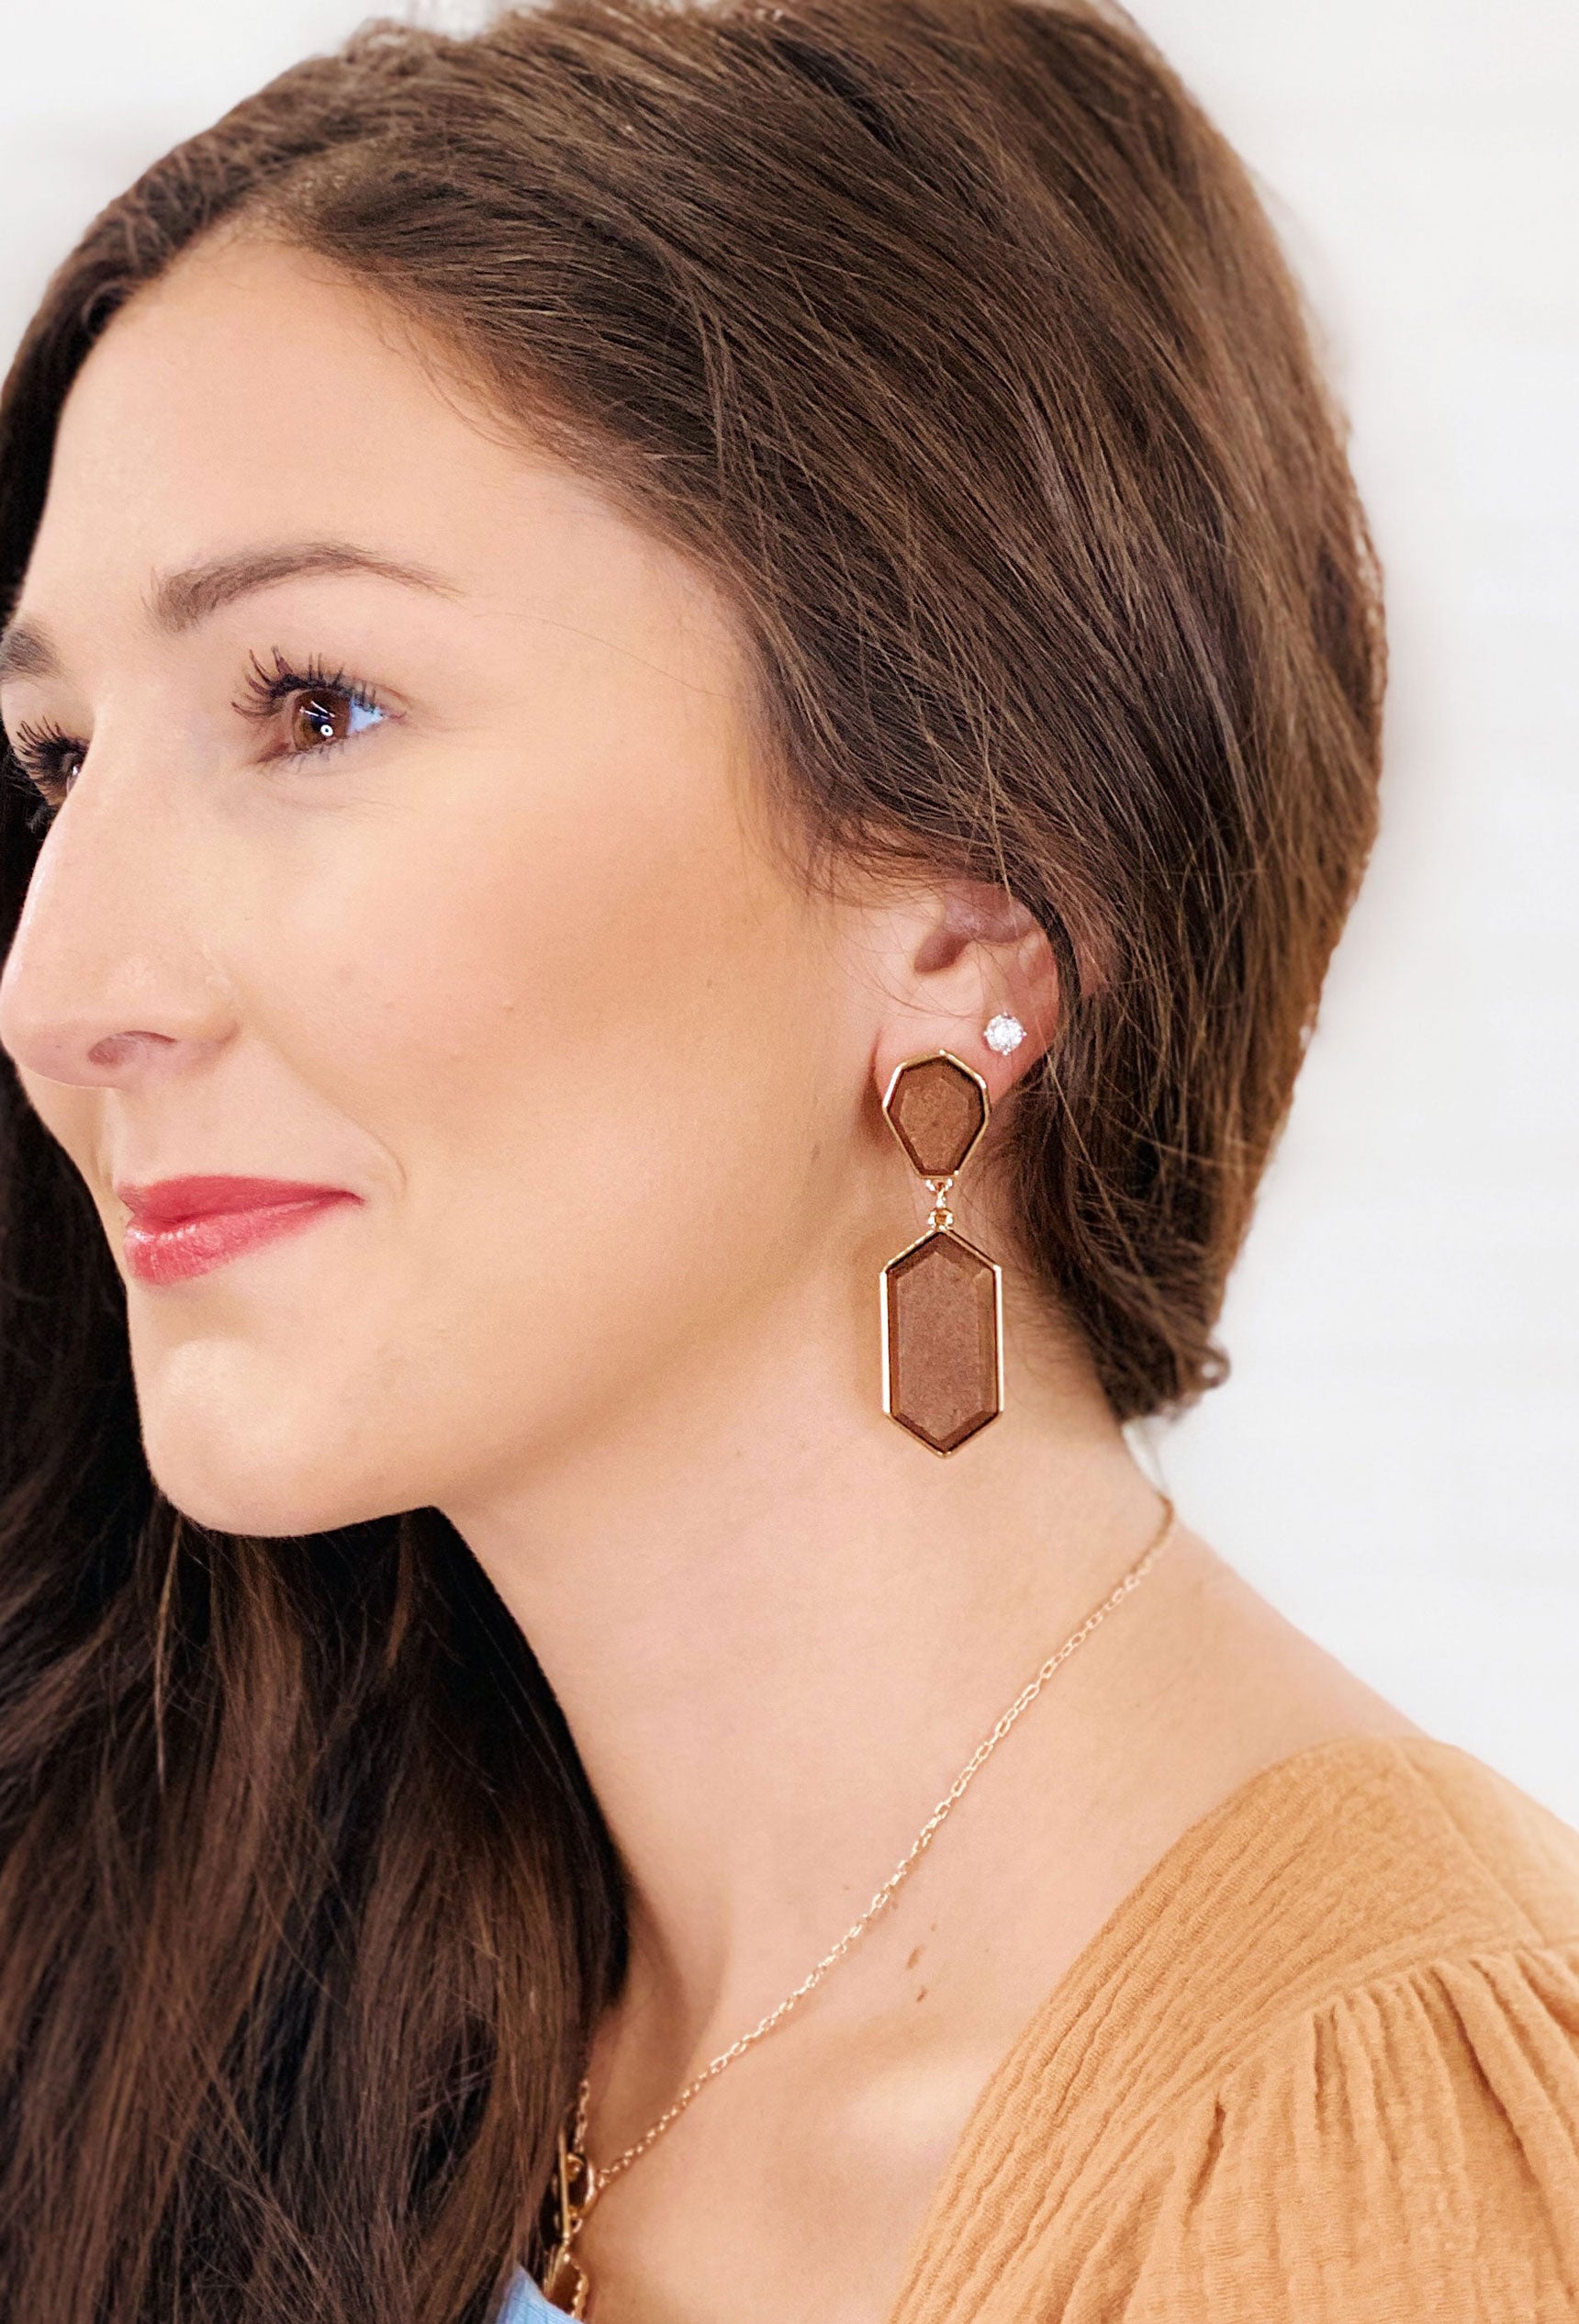 Geometric Wood Drop Earrings, Brown geometric earring with gold backing